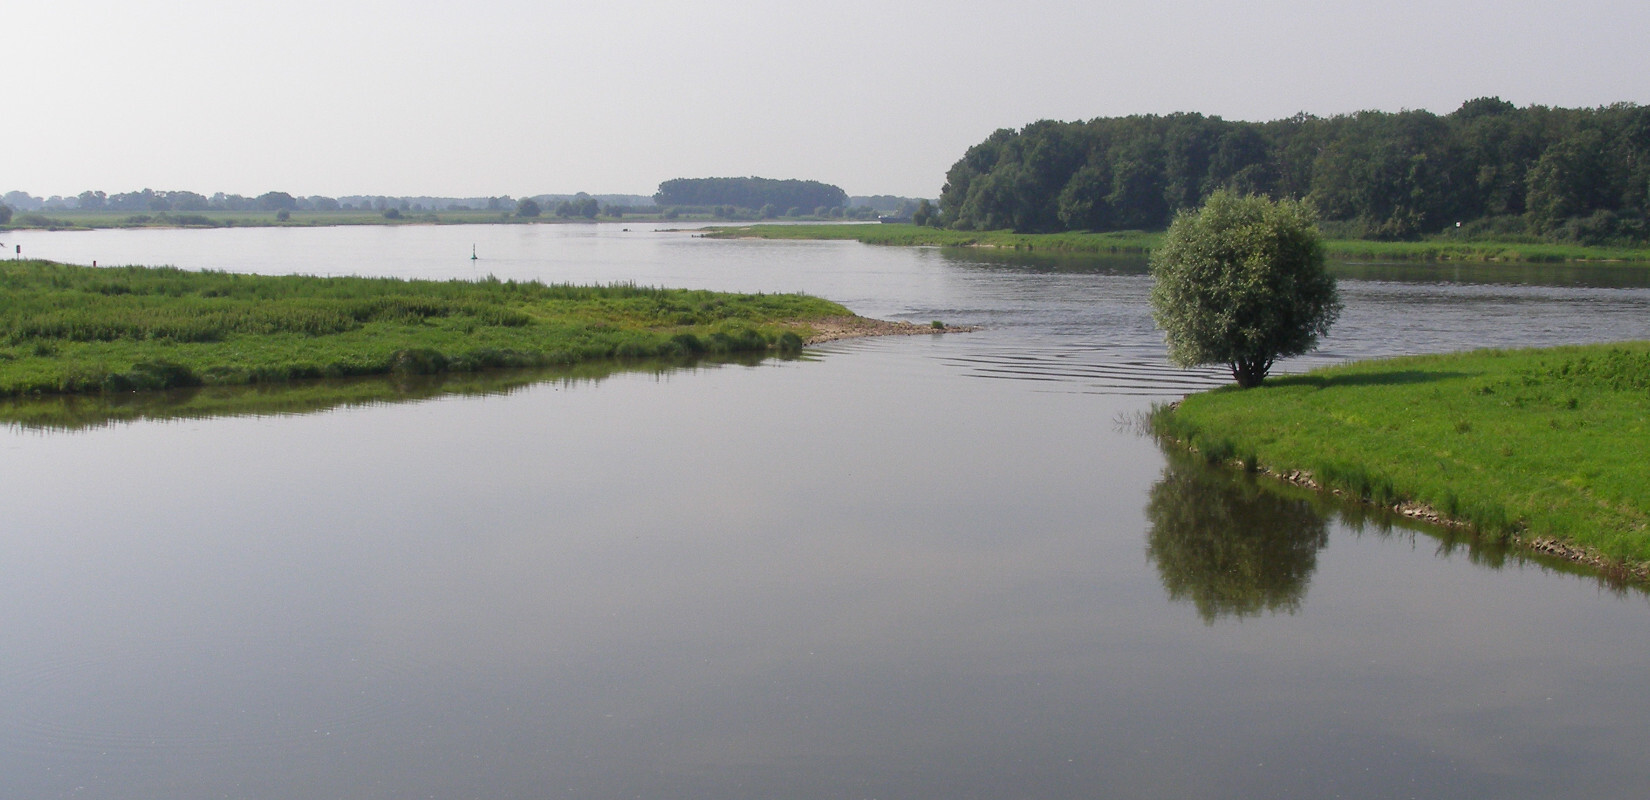 The river Elbe flows through a meadow landscape.